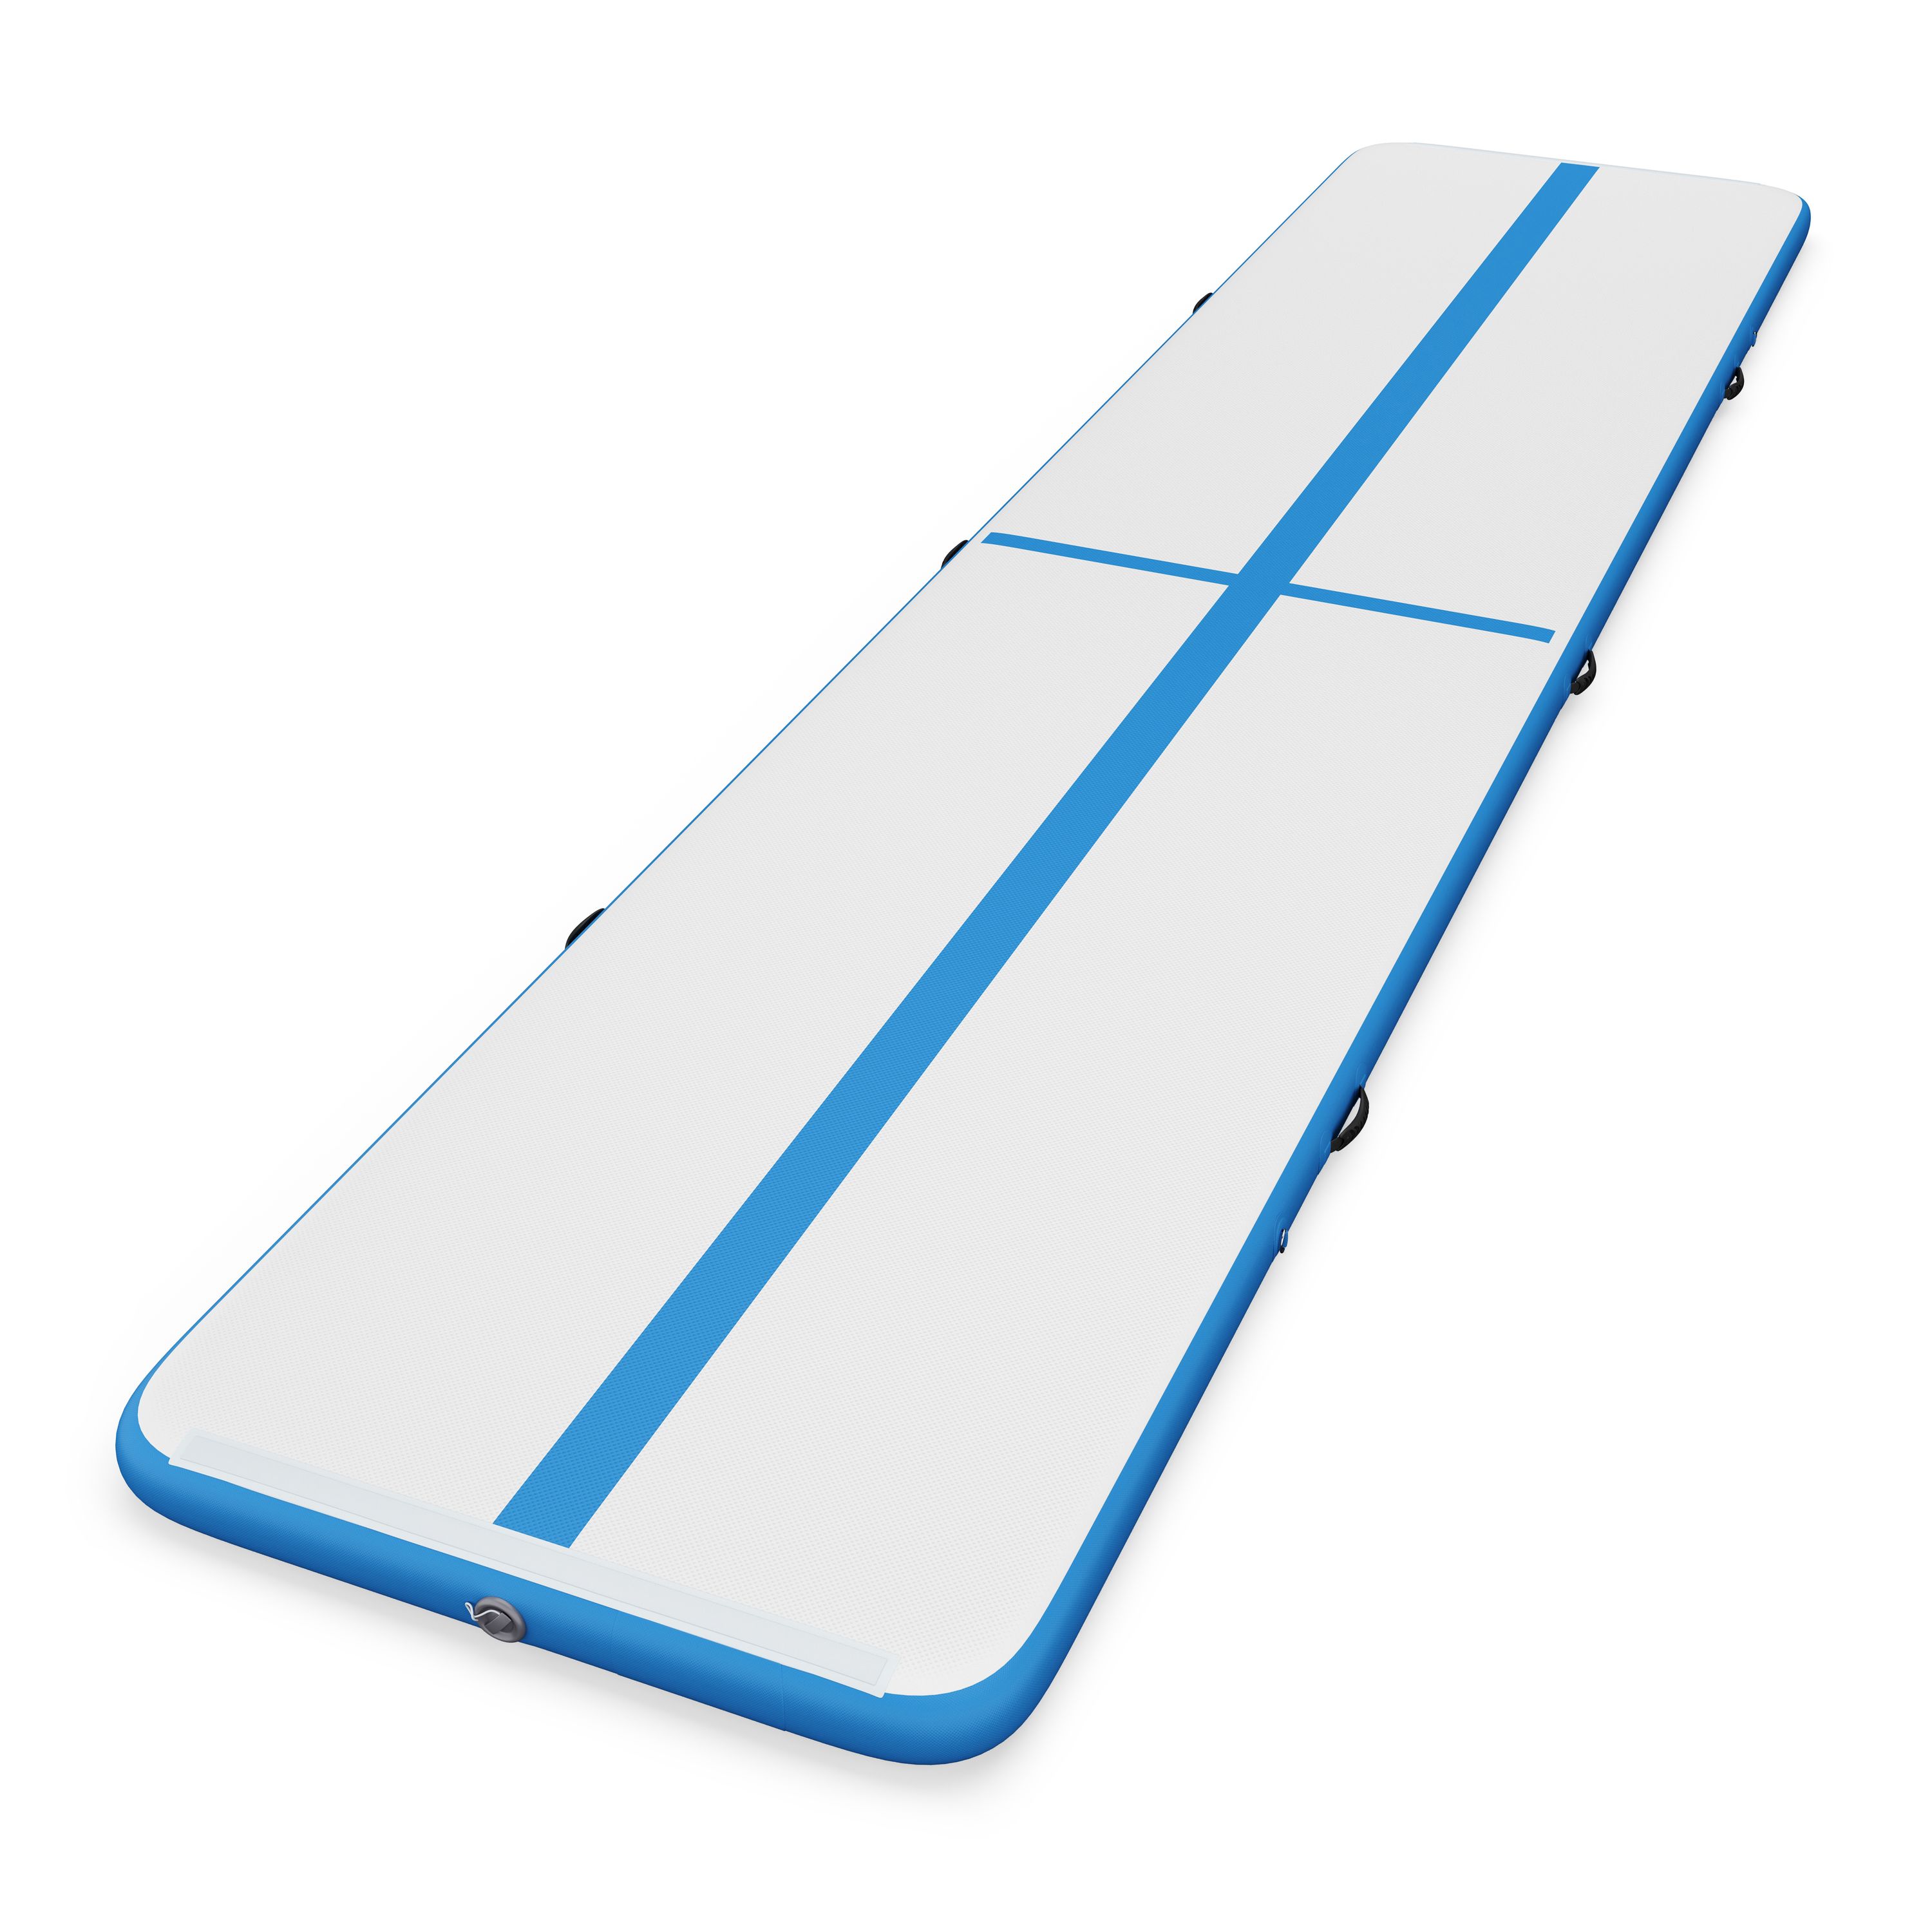 Airtrack tapis de gymnastique 4.5 m bleu